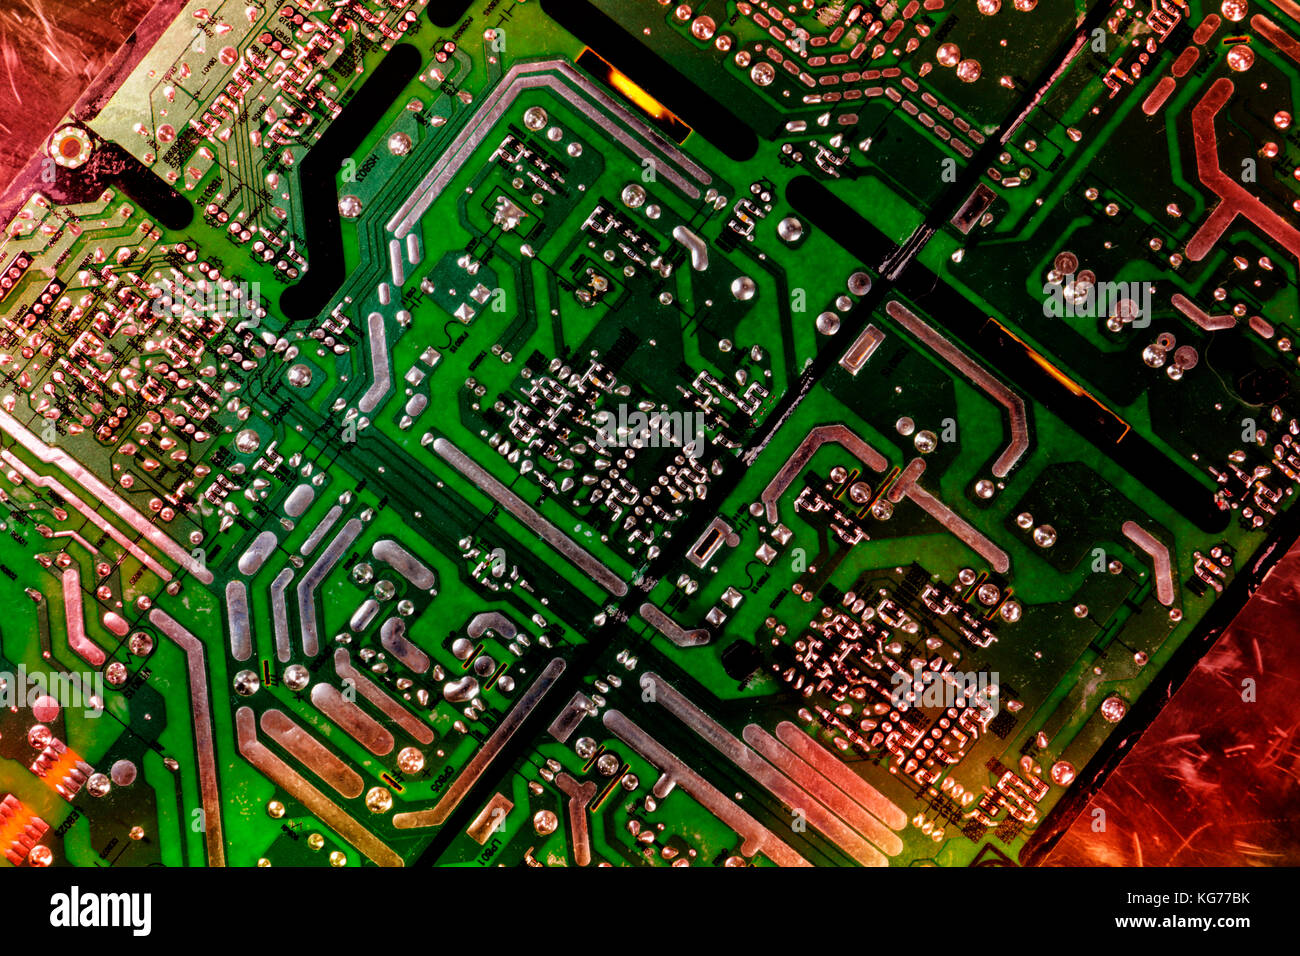 Computer Teile Motherboard und Mikrochips Stockfoto